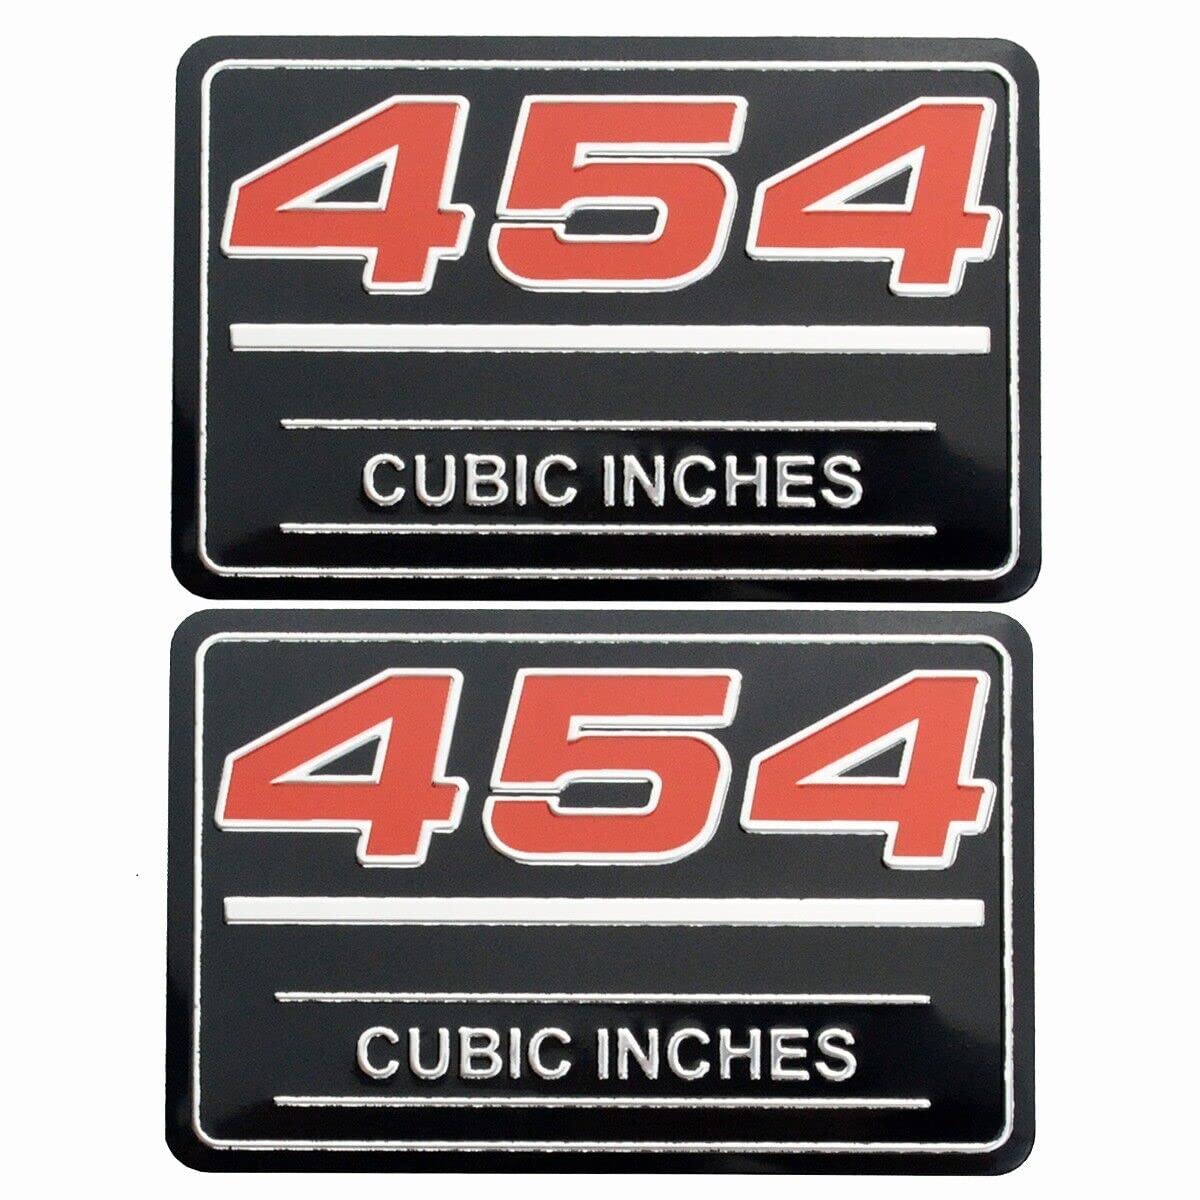 2 x 454 Cubic Inch Emblem 3D Badge Ventilabdeckung Metall Einsatz Aufkleber Tonawanda 12393652 Schwarz Rot von Aimoll